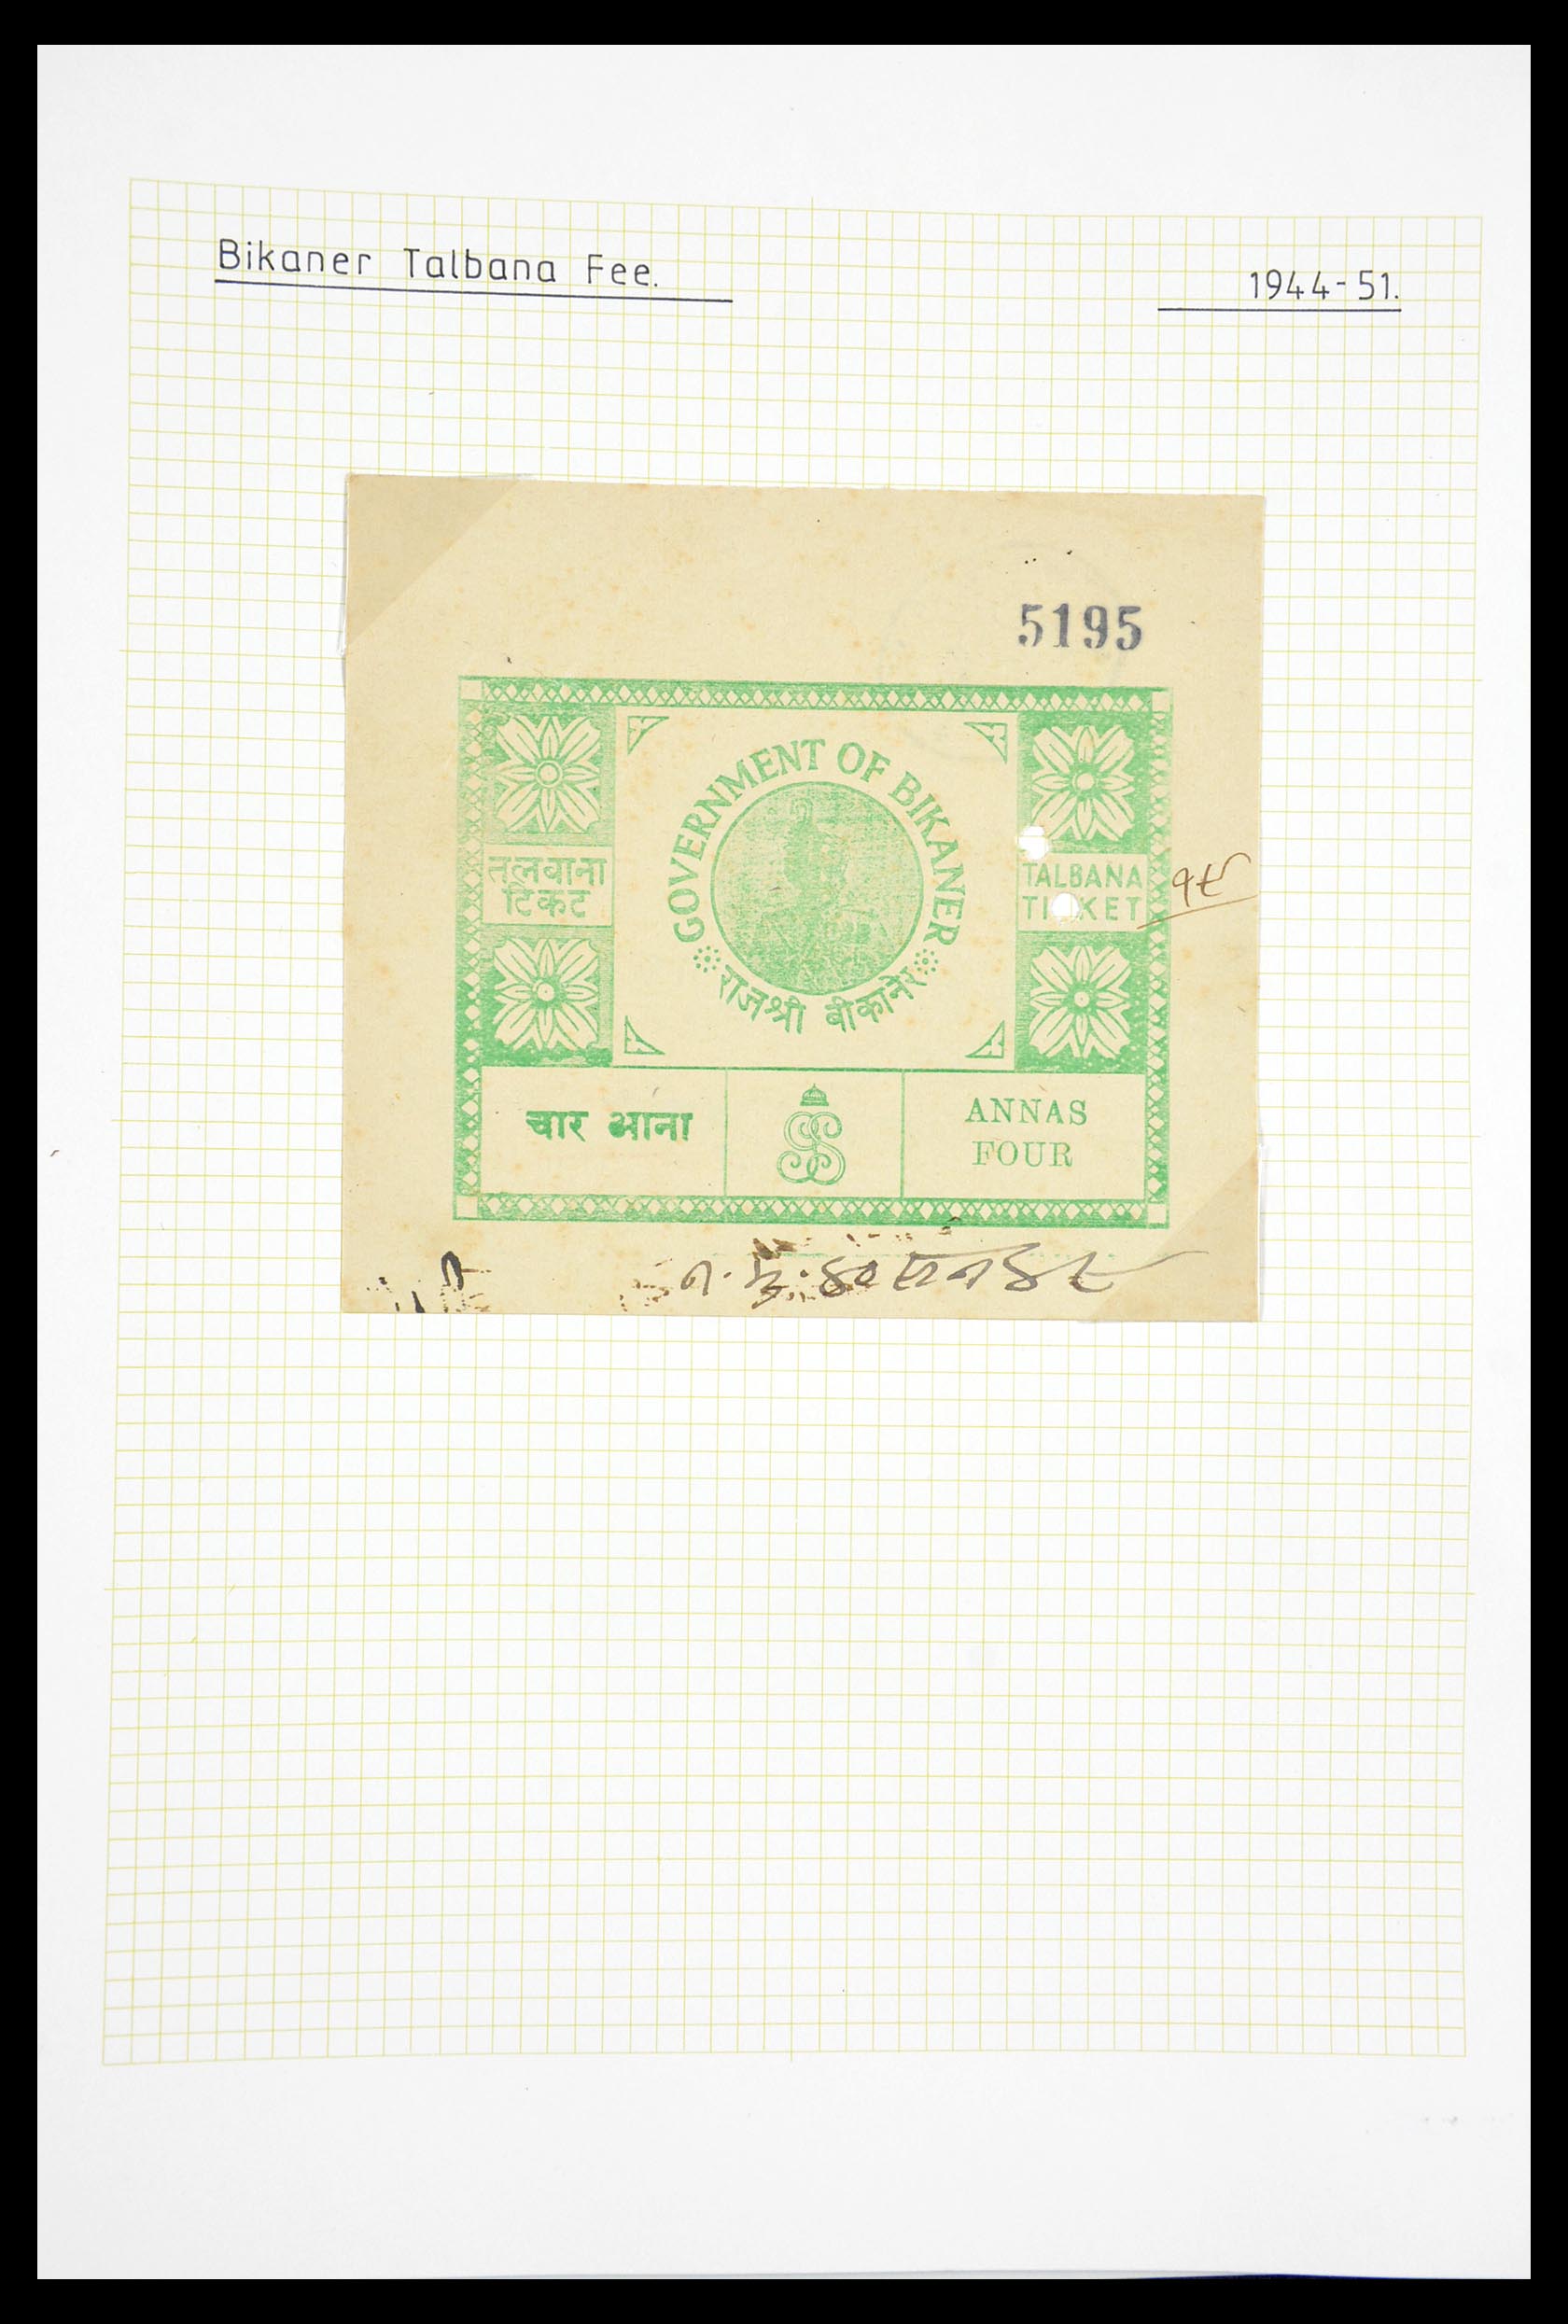 29571 077 - 29571 Indiase Staten fiscaal 1884-1951.